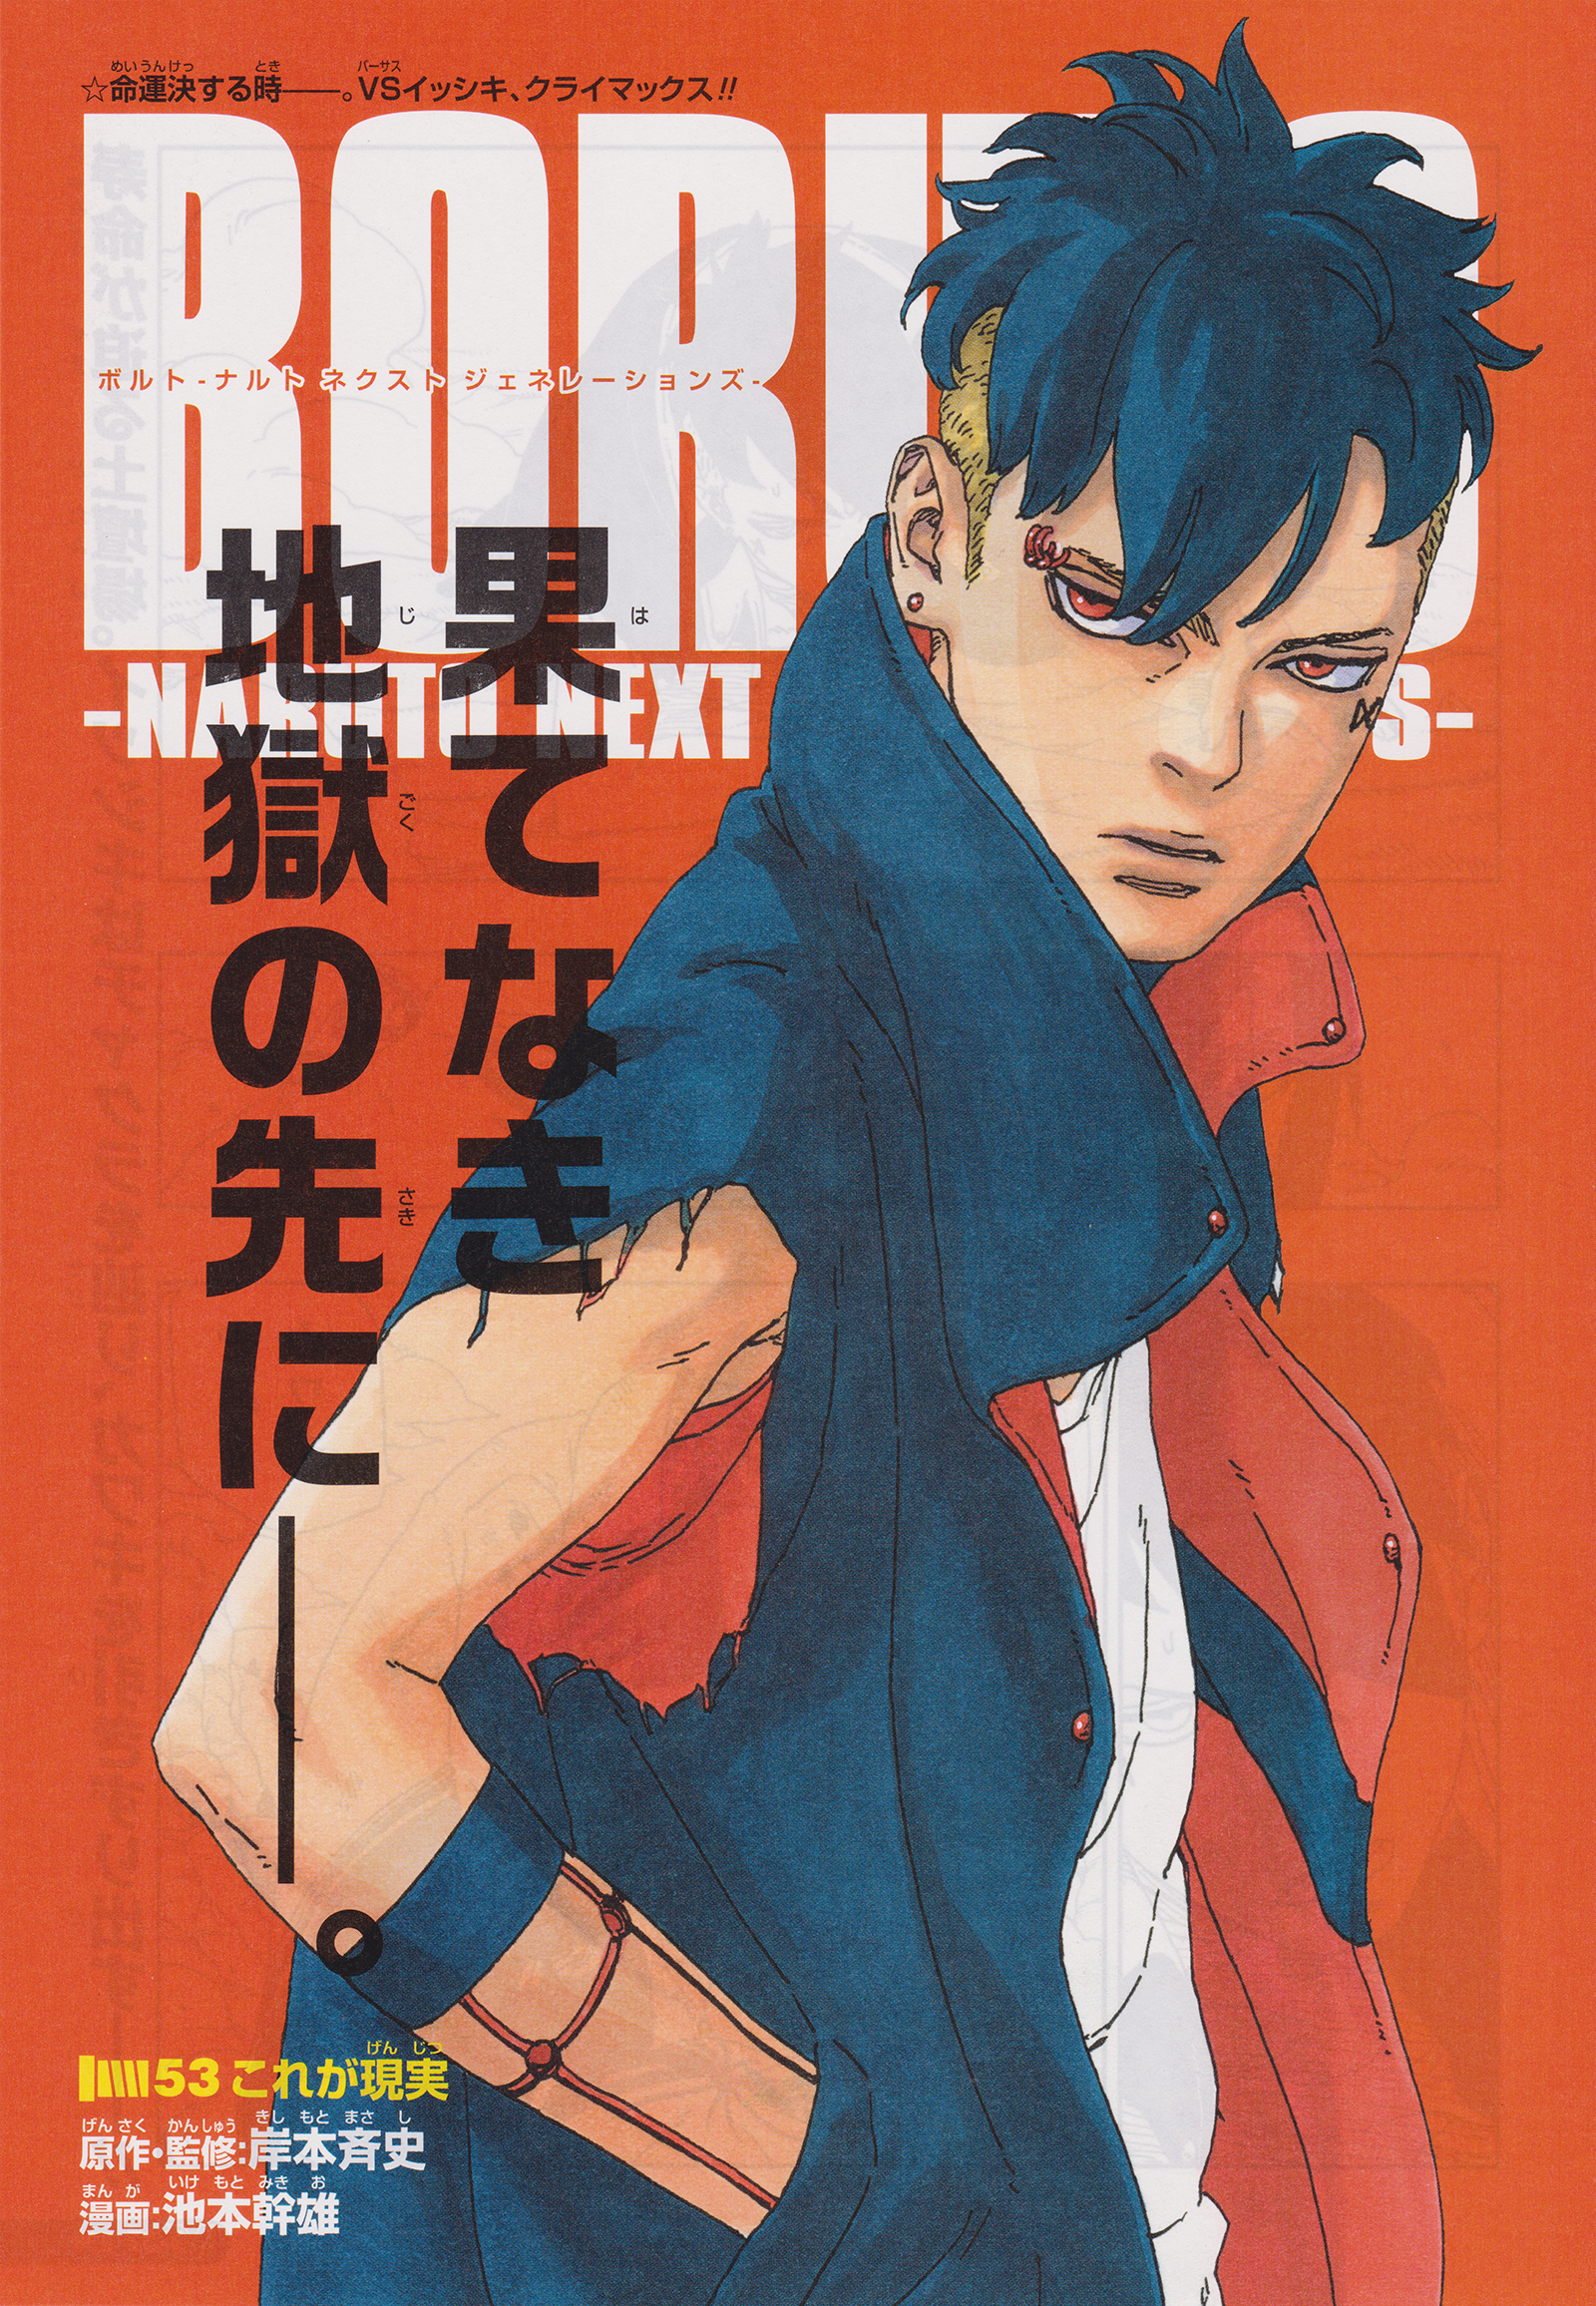 The manga follows the anime tbh” : r/Boruto